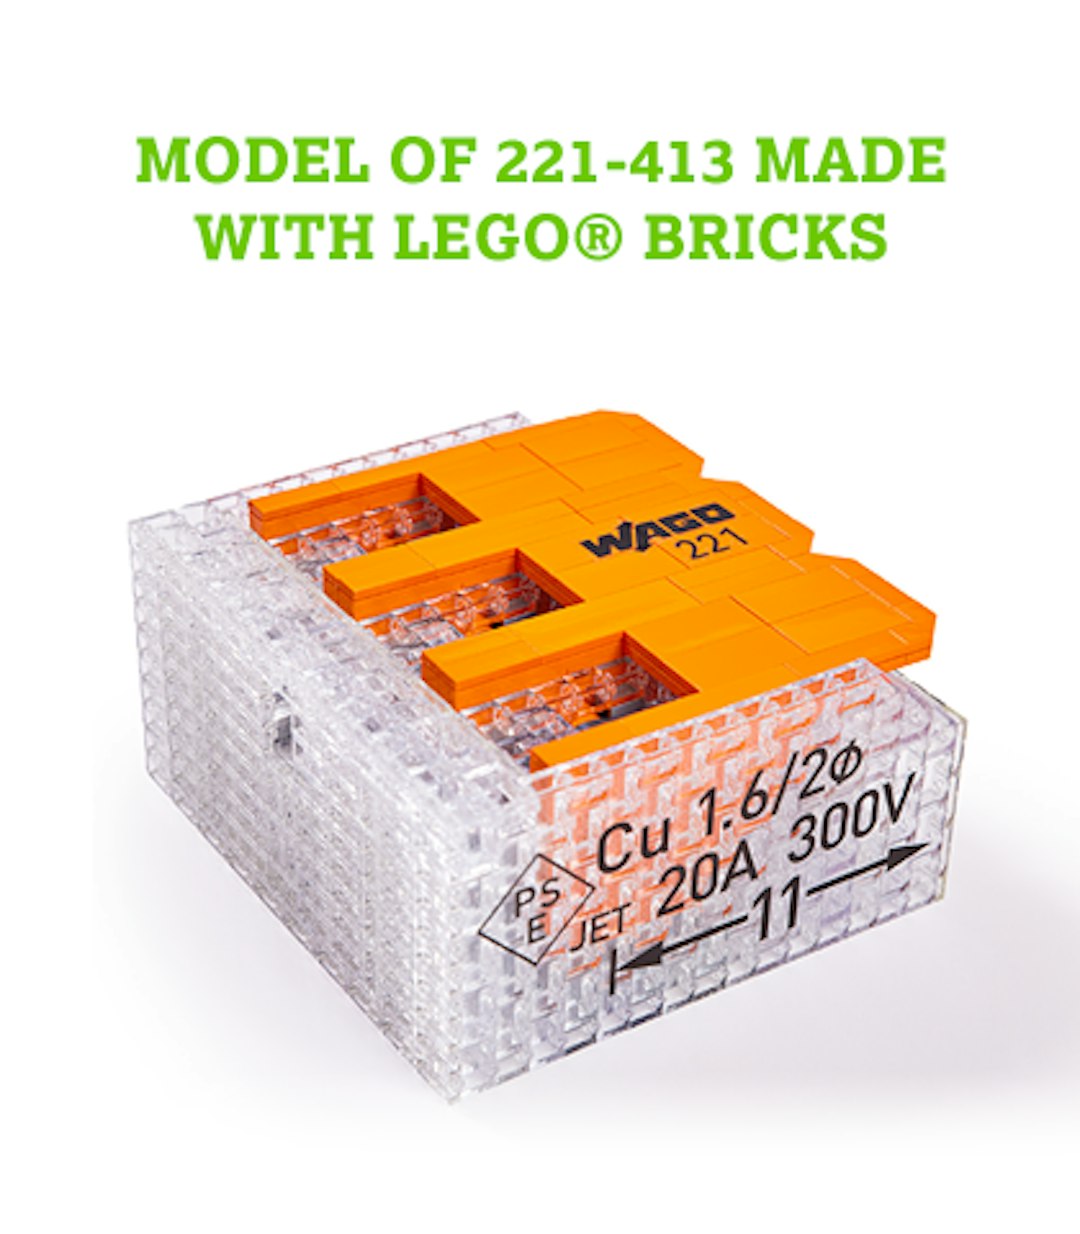 Wago 221-413 model made with Lego bricks